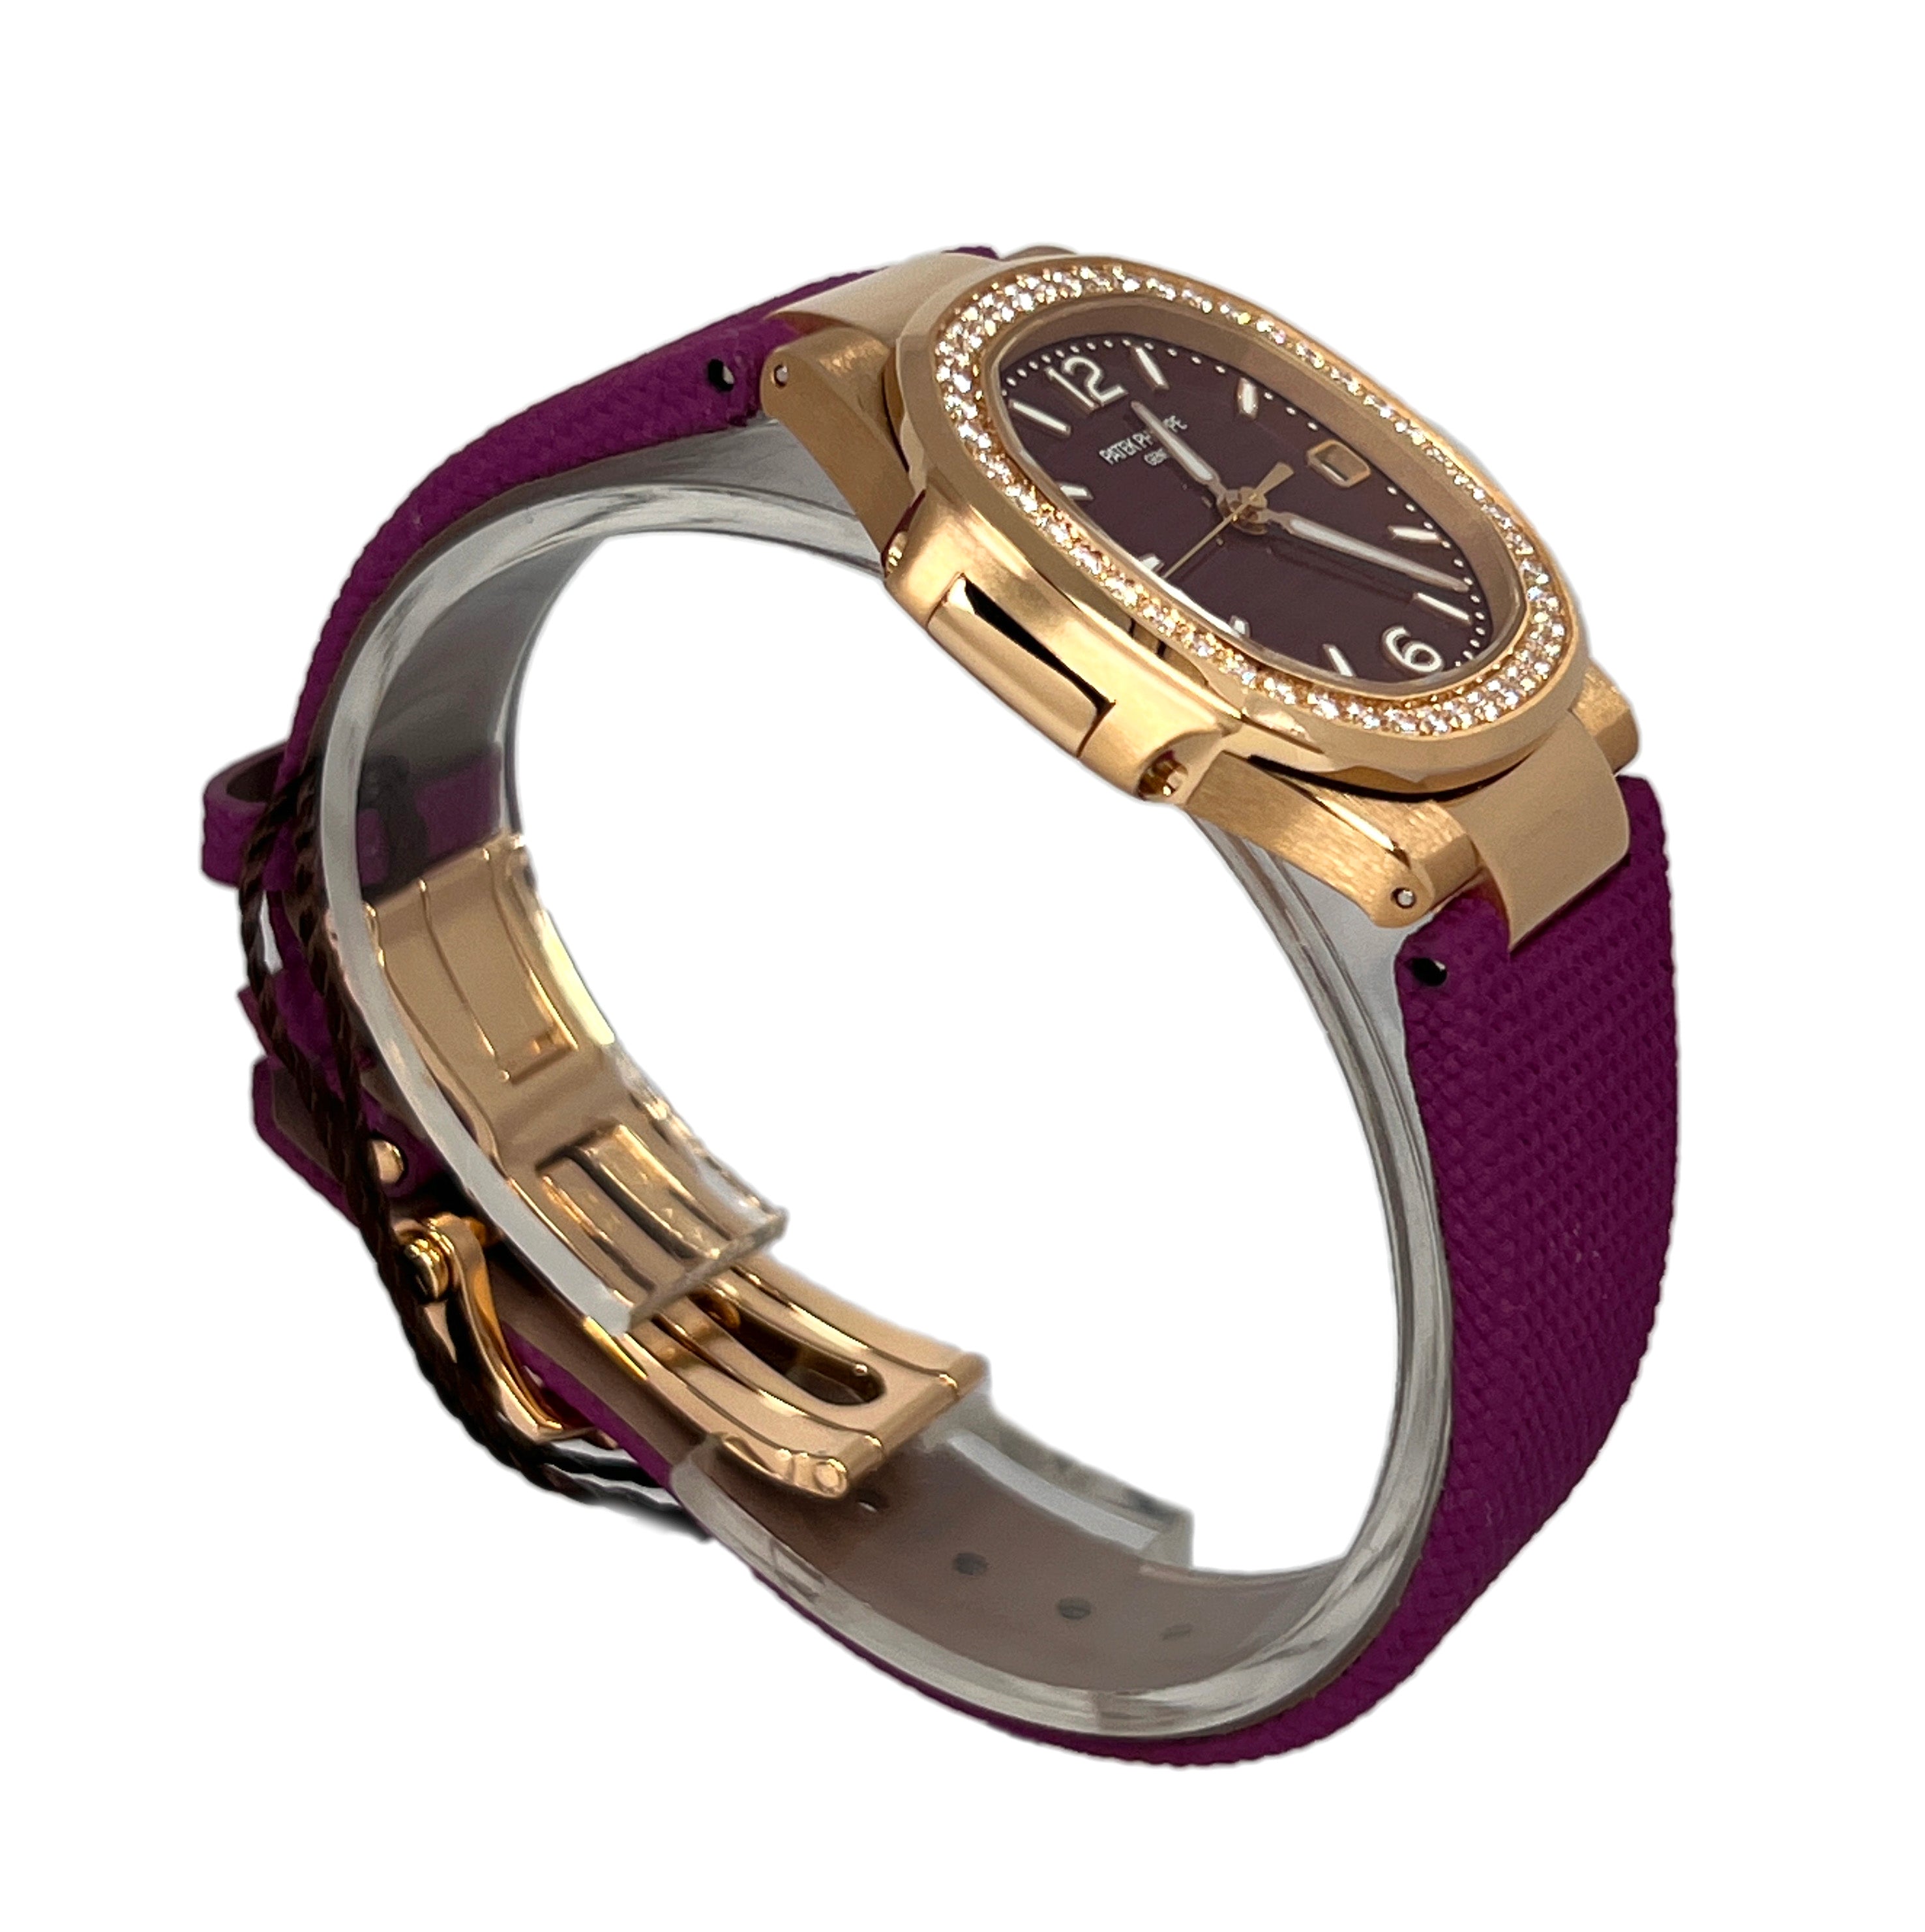 Patek Philippe Nautilus 18K Rose Gold & Diamonds Lady's Watch